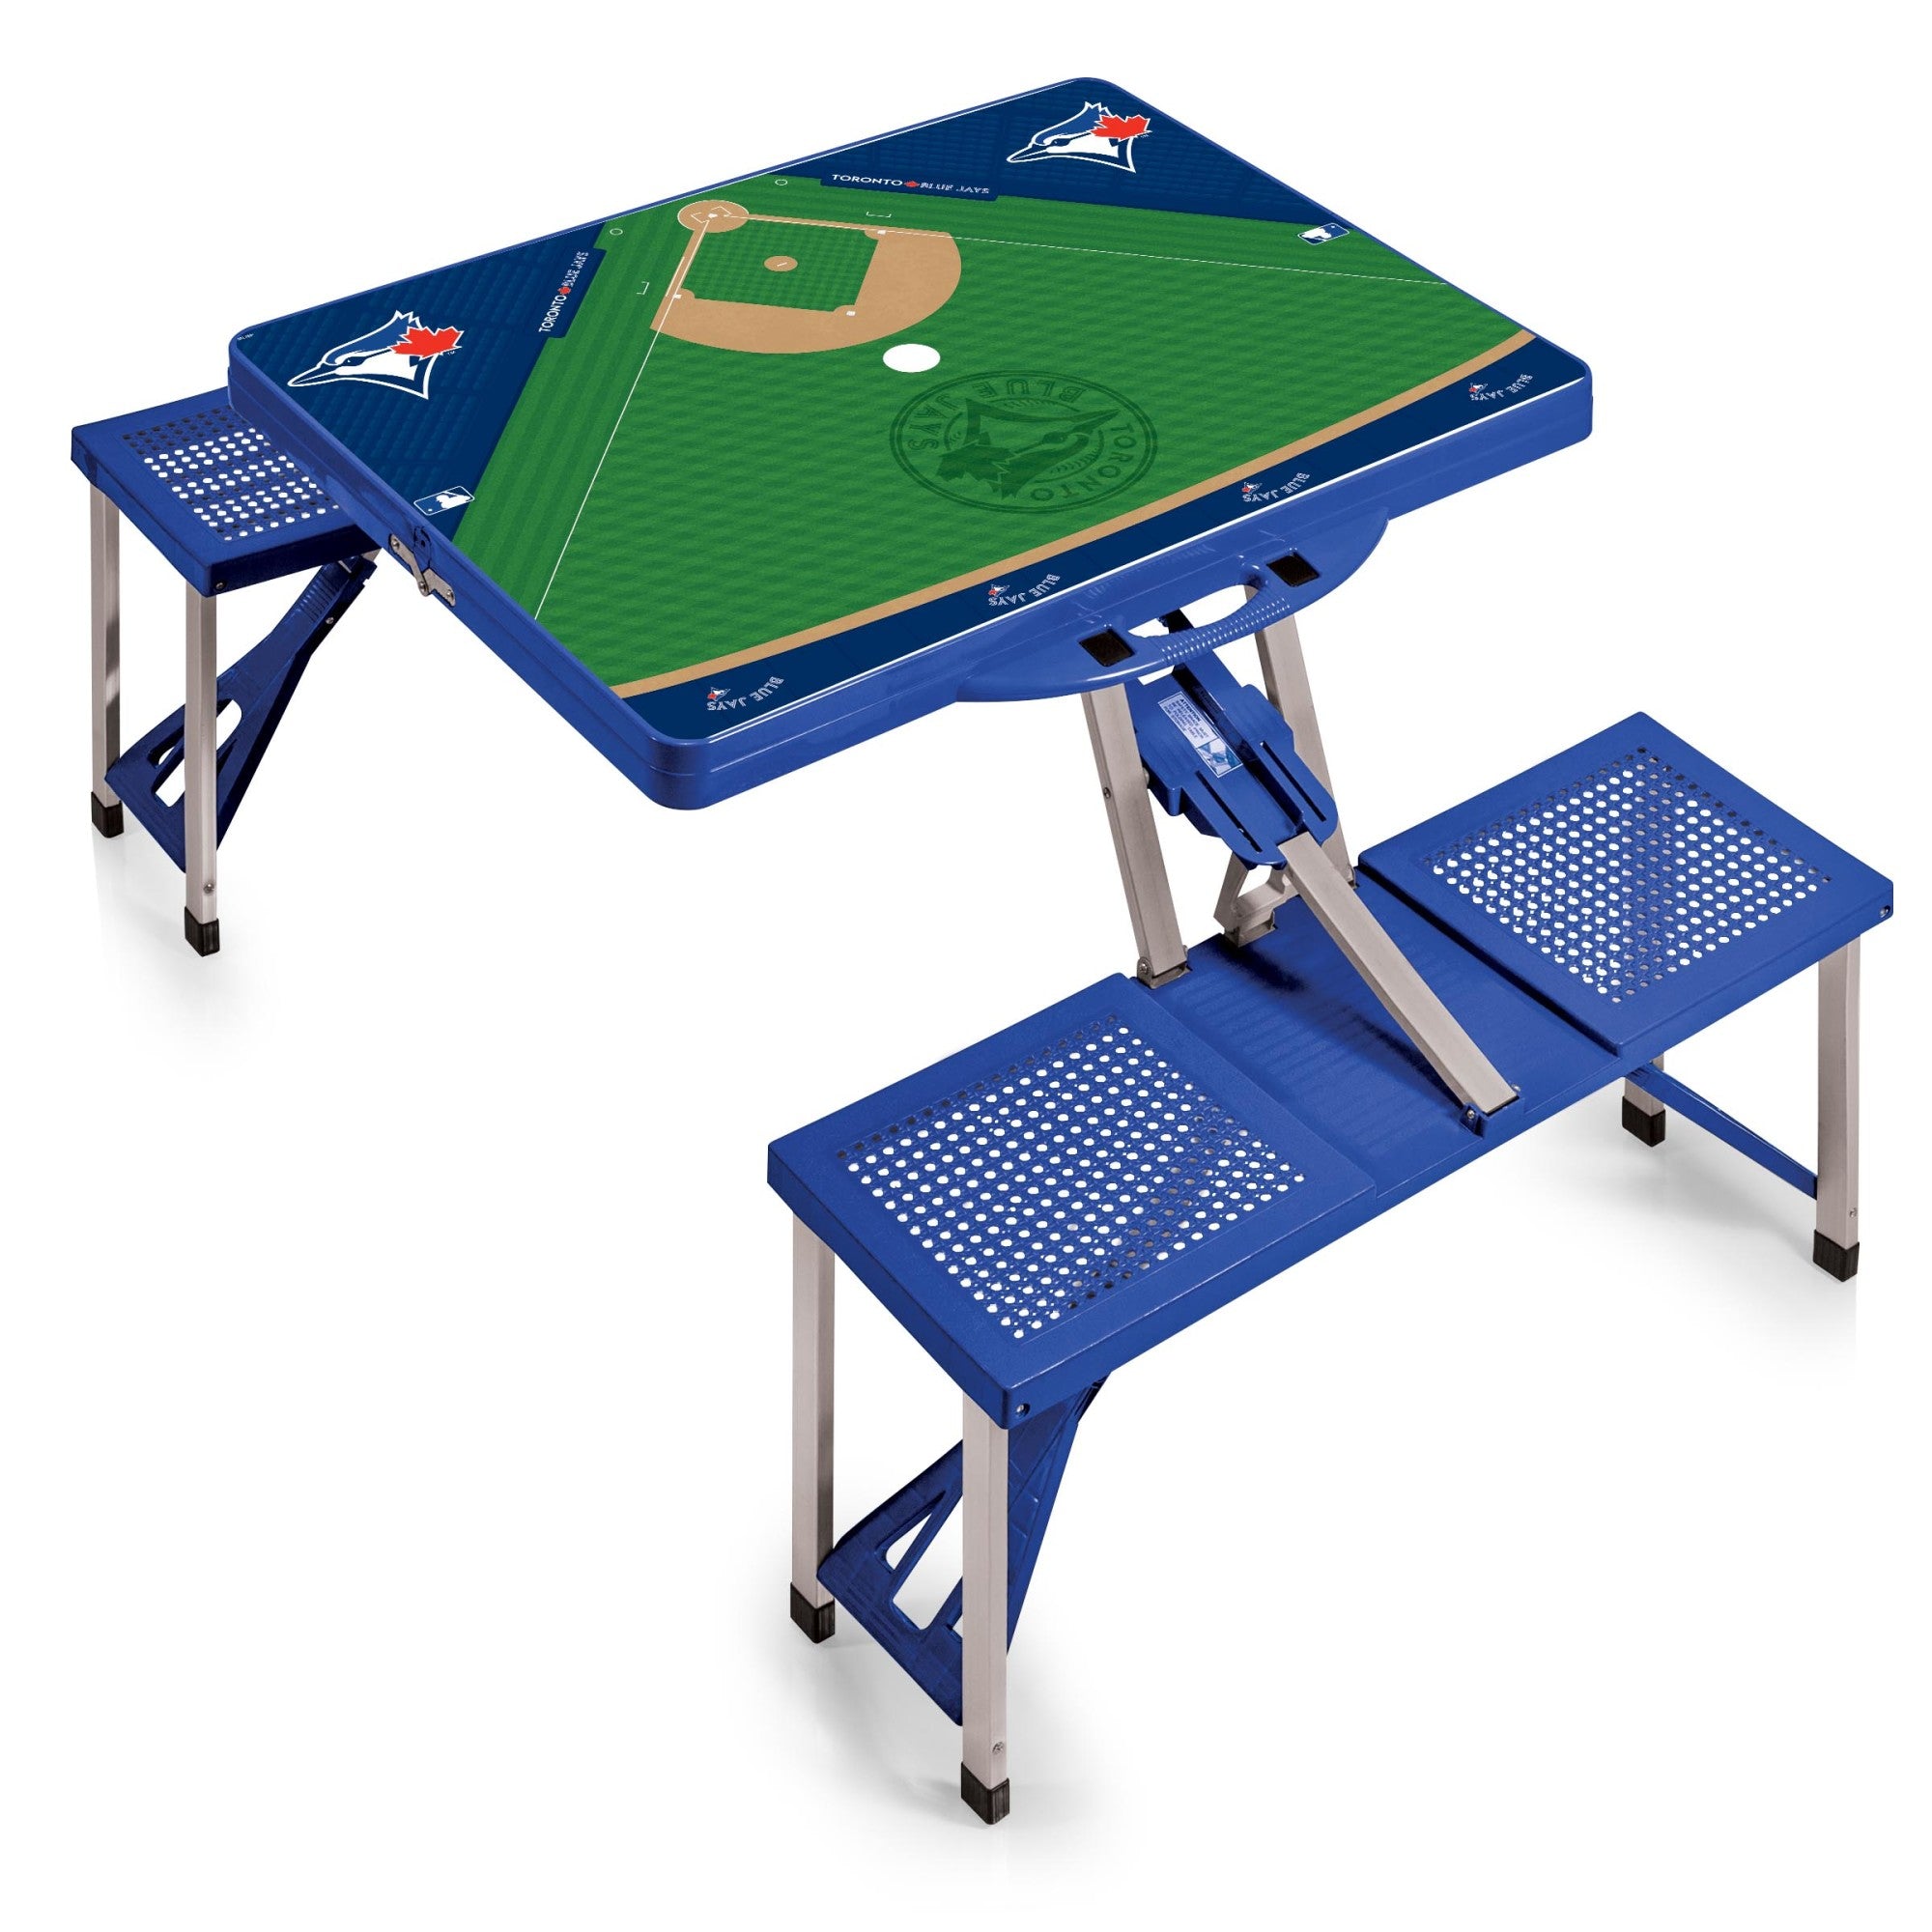 Toronto Blue Jays Baseball Diamond - Picnic Table Portable Folding Table with Seats